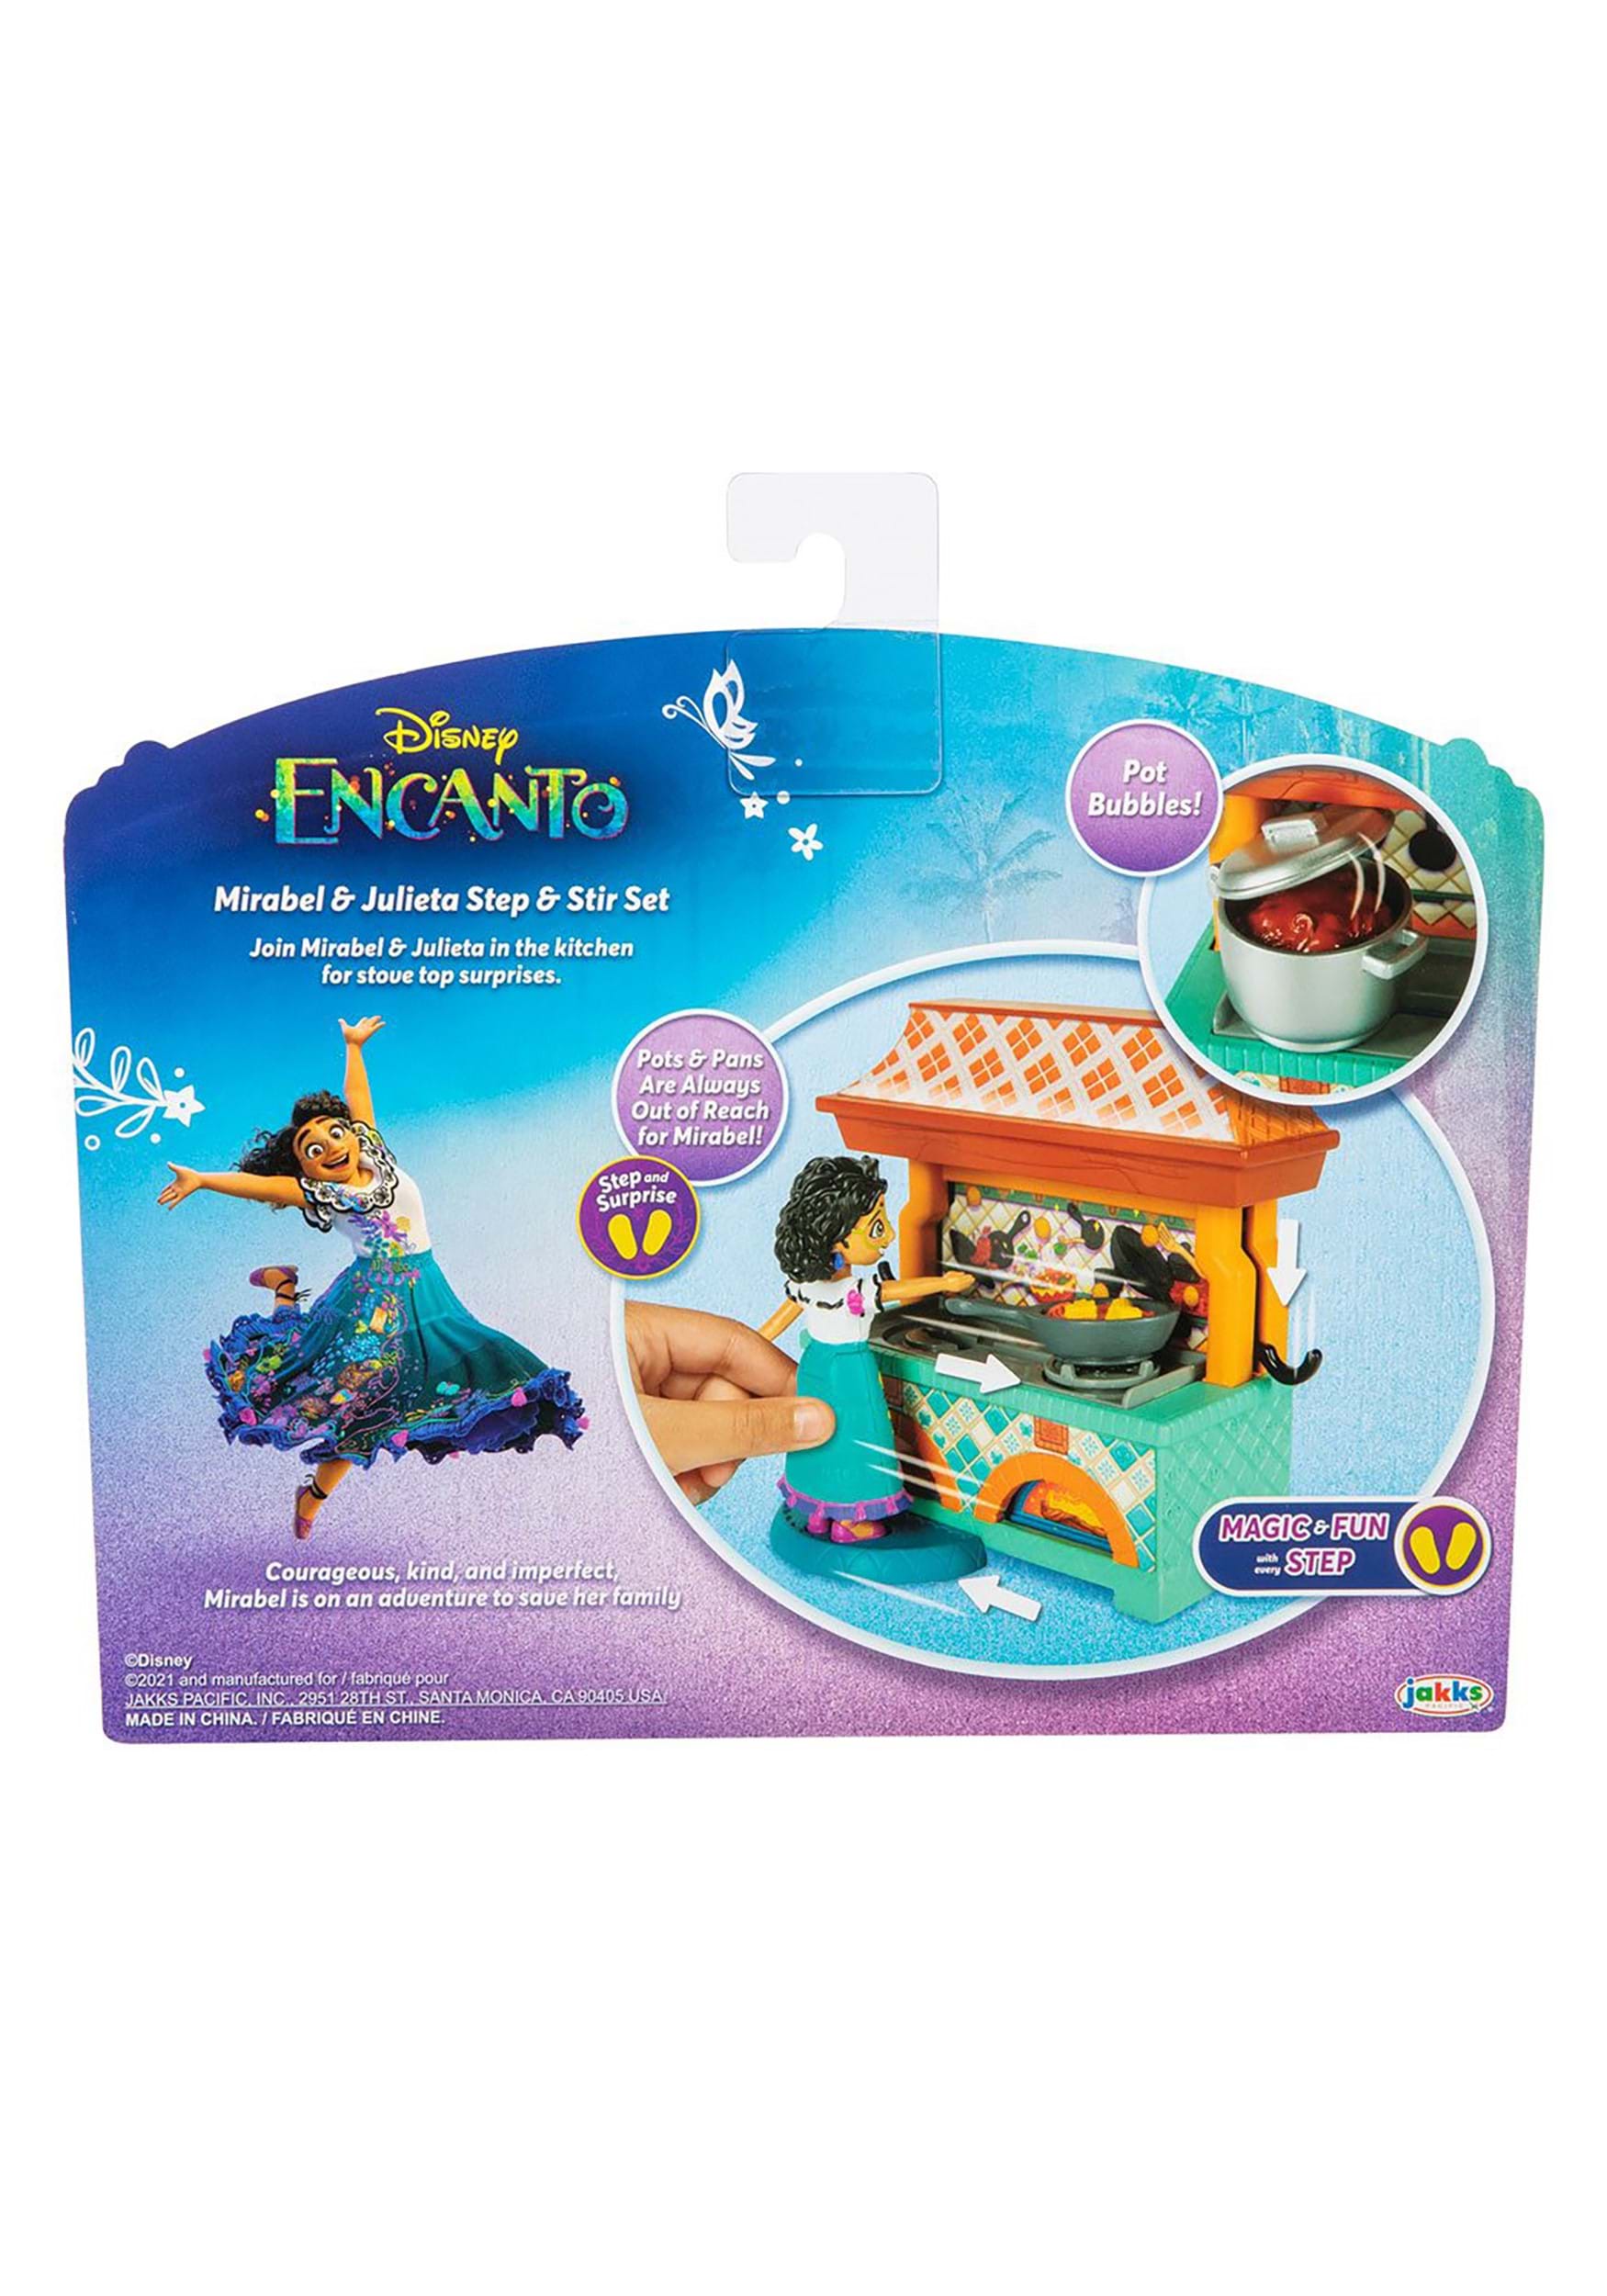  Disney Princess Stir 'n Bake Kitchen : Hasbro: Toys & Games